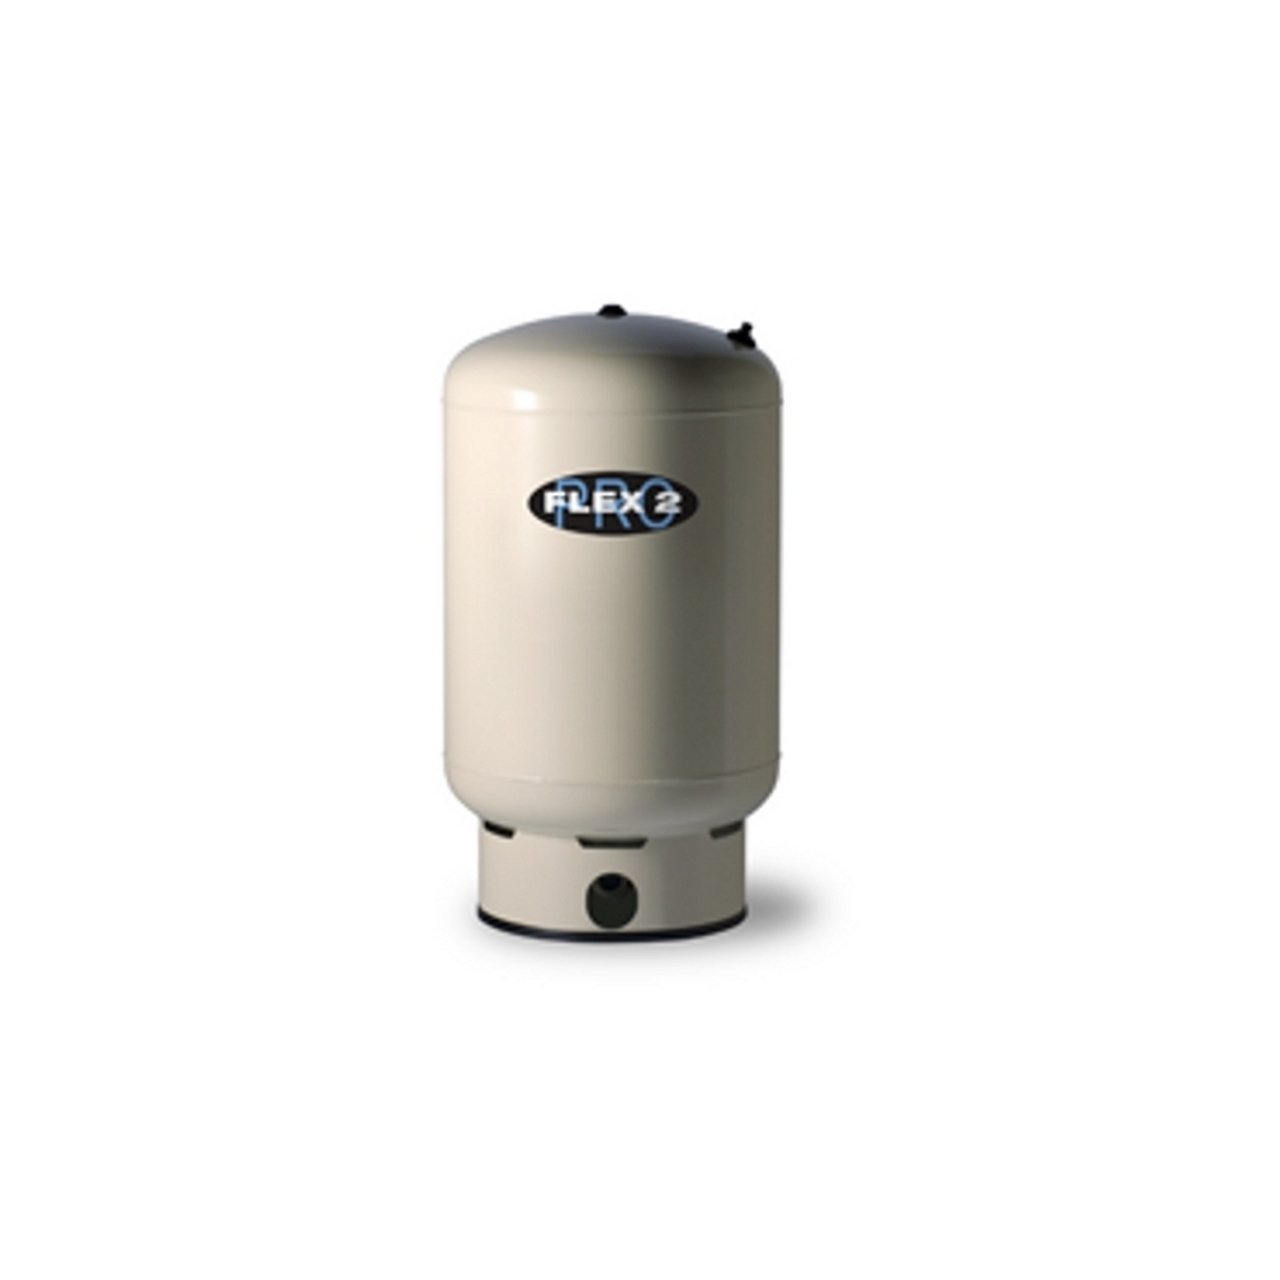 Flexcon 45 Gallon Well Tank WWT 45 Flex 2 Pro – Aquapura Water Products